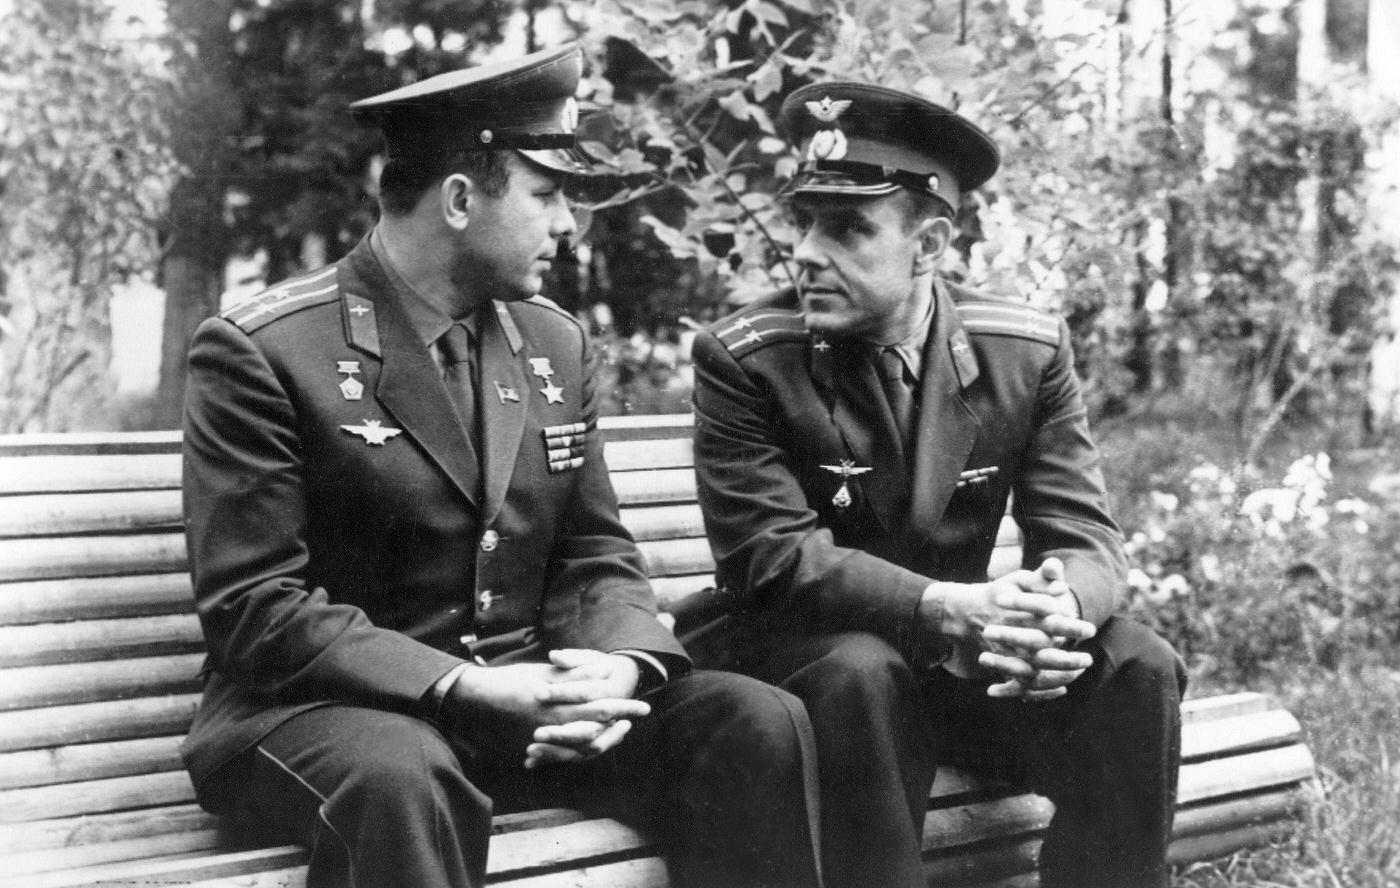 Vladimir M. Komarov in conversation with the cosmonaut Yuri Gagarin, 1960s